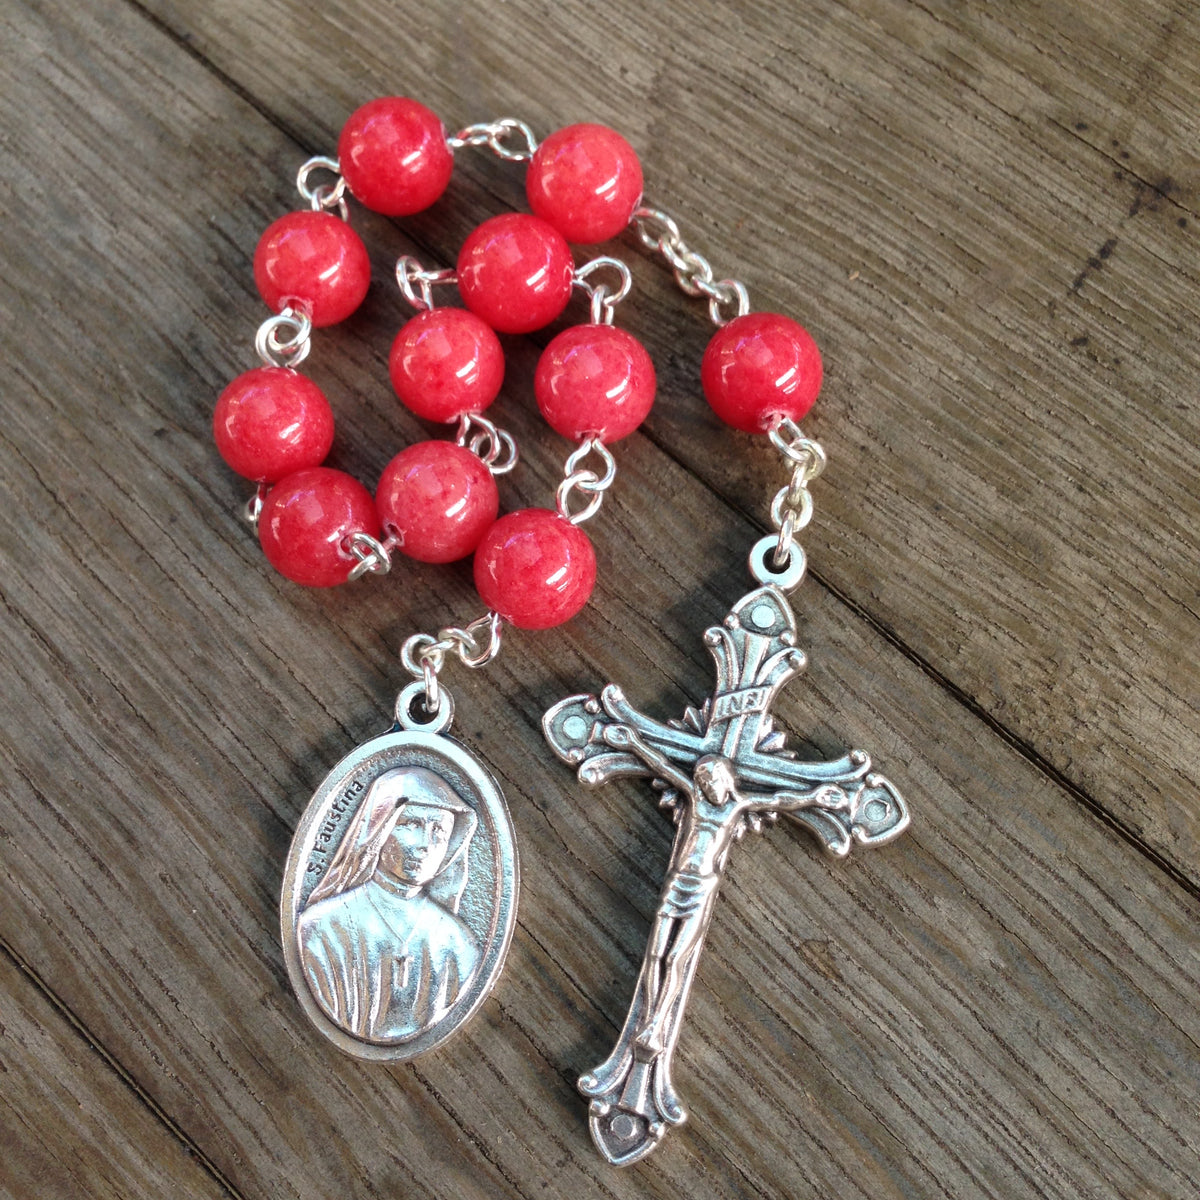 Divine Mercy Prayer Beads - Pocket-Sized 33-Bead Rosary - Unspoken Elements